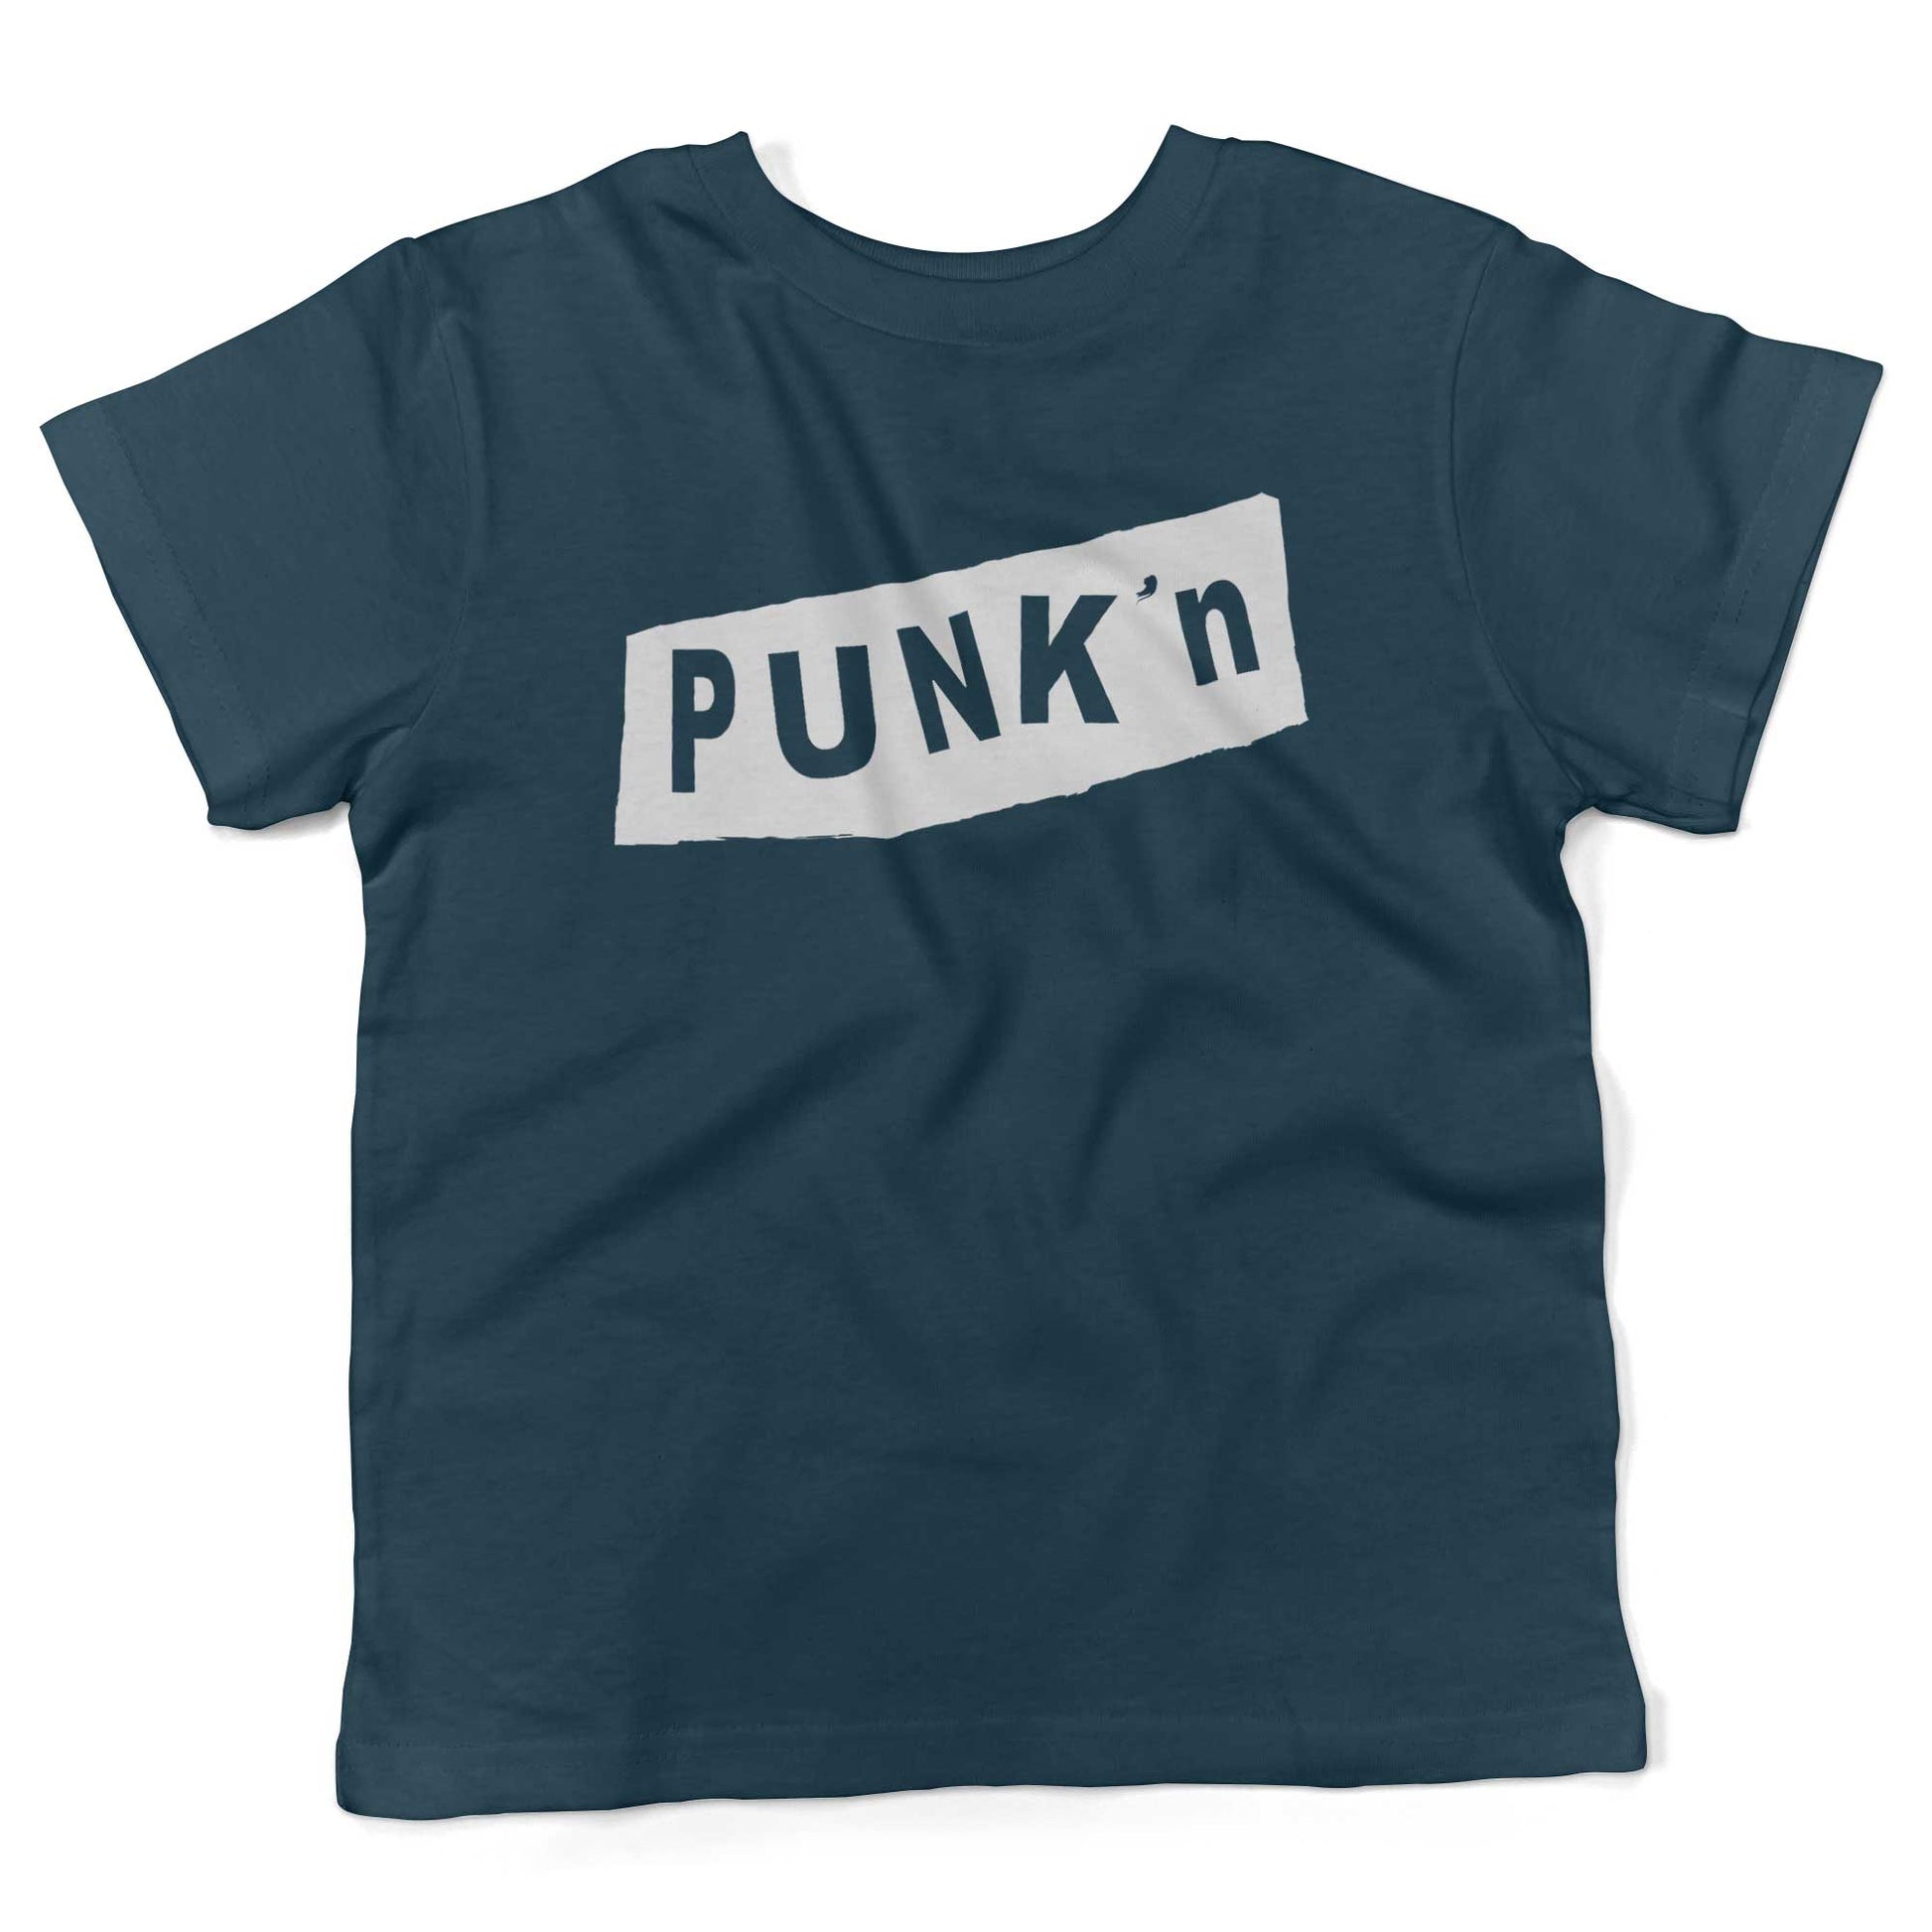 Pumpkin Punk'n Toddler Shirt-Organic Pacific Blue-2T